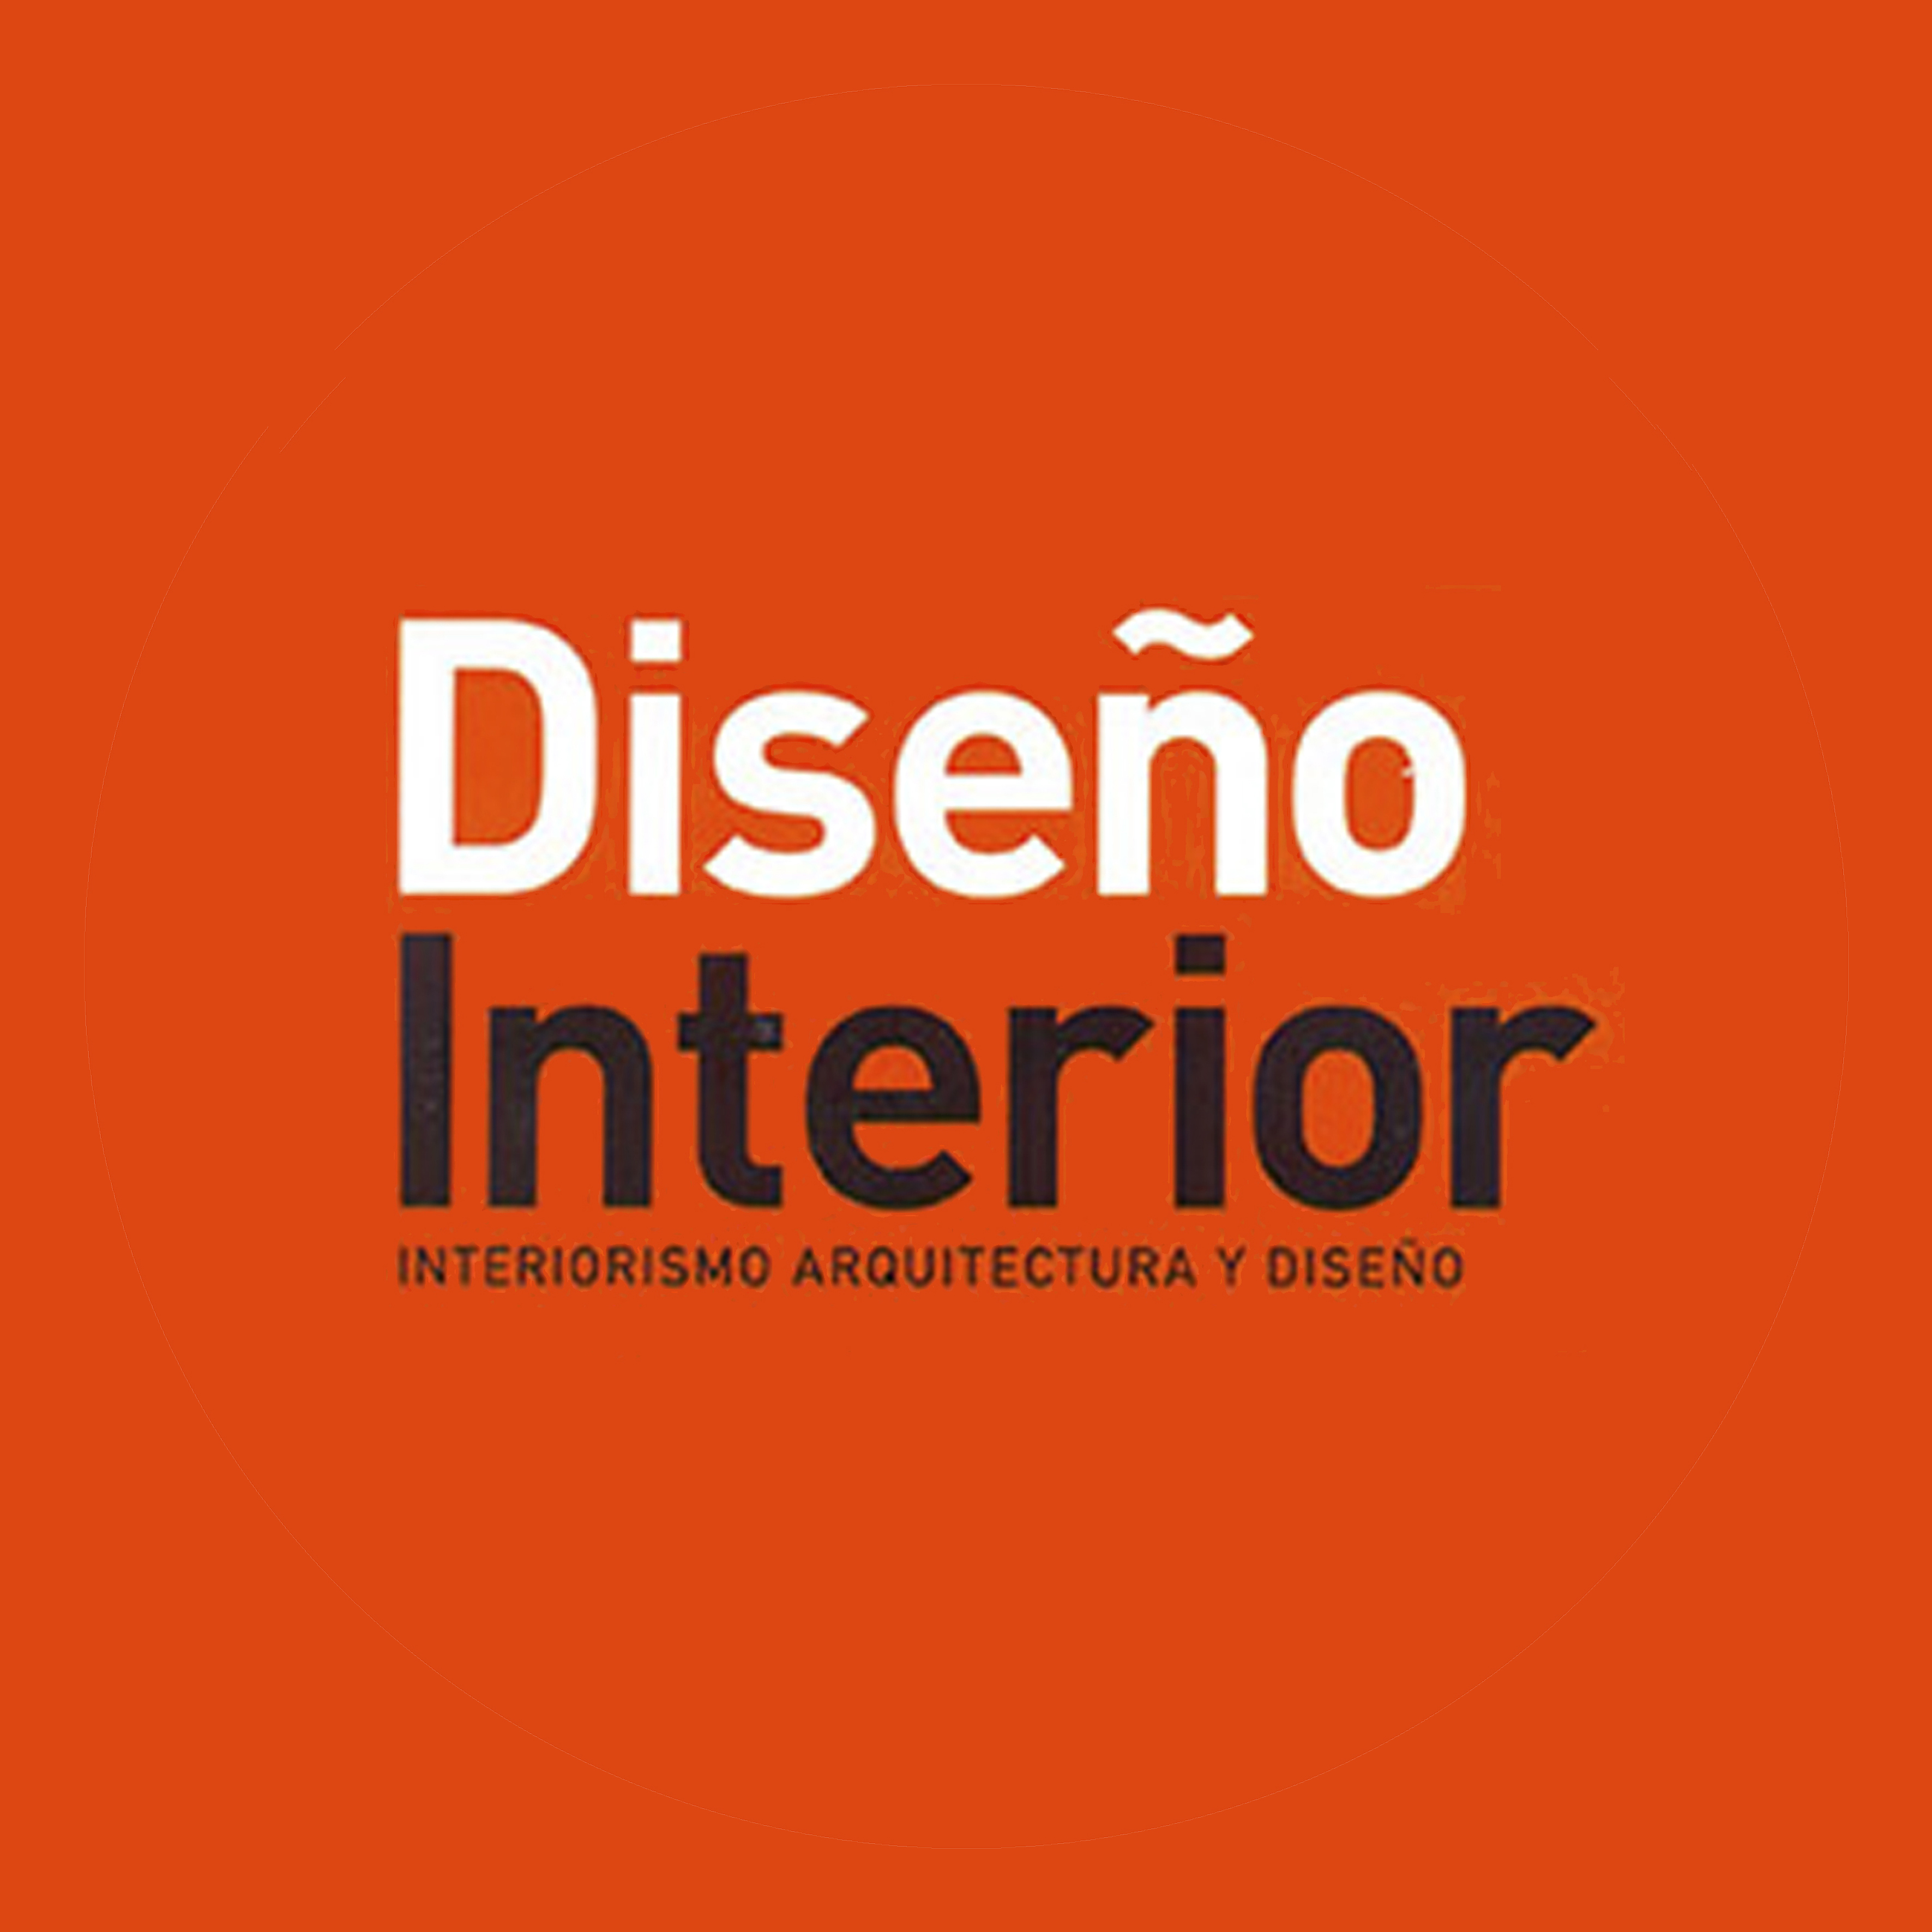 diseno-interior-magazine-spain-logo